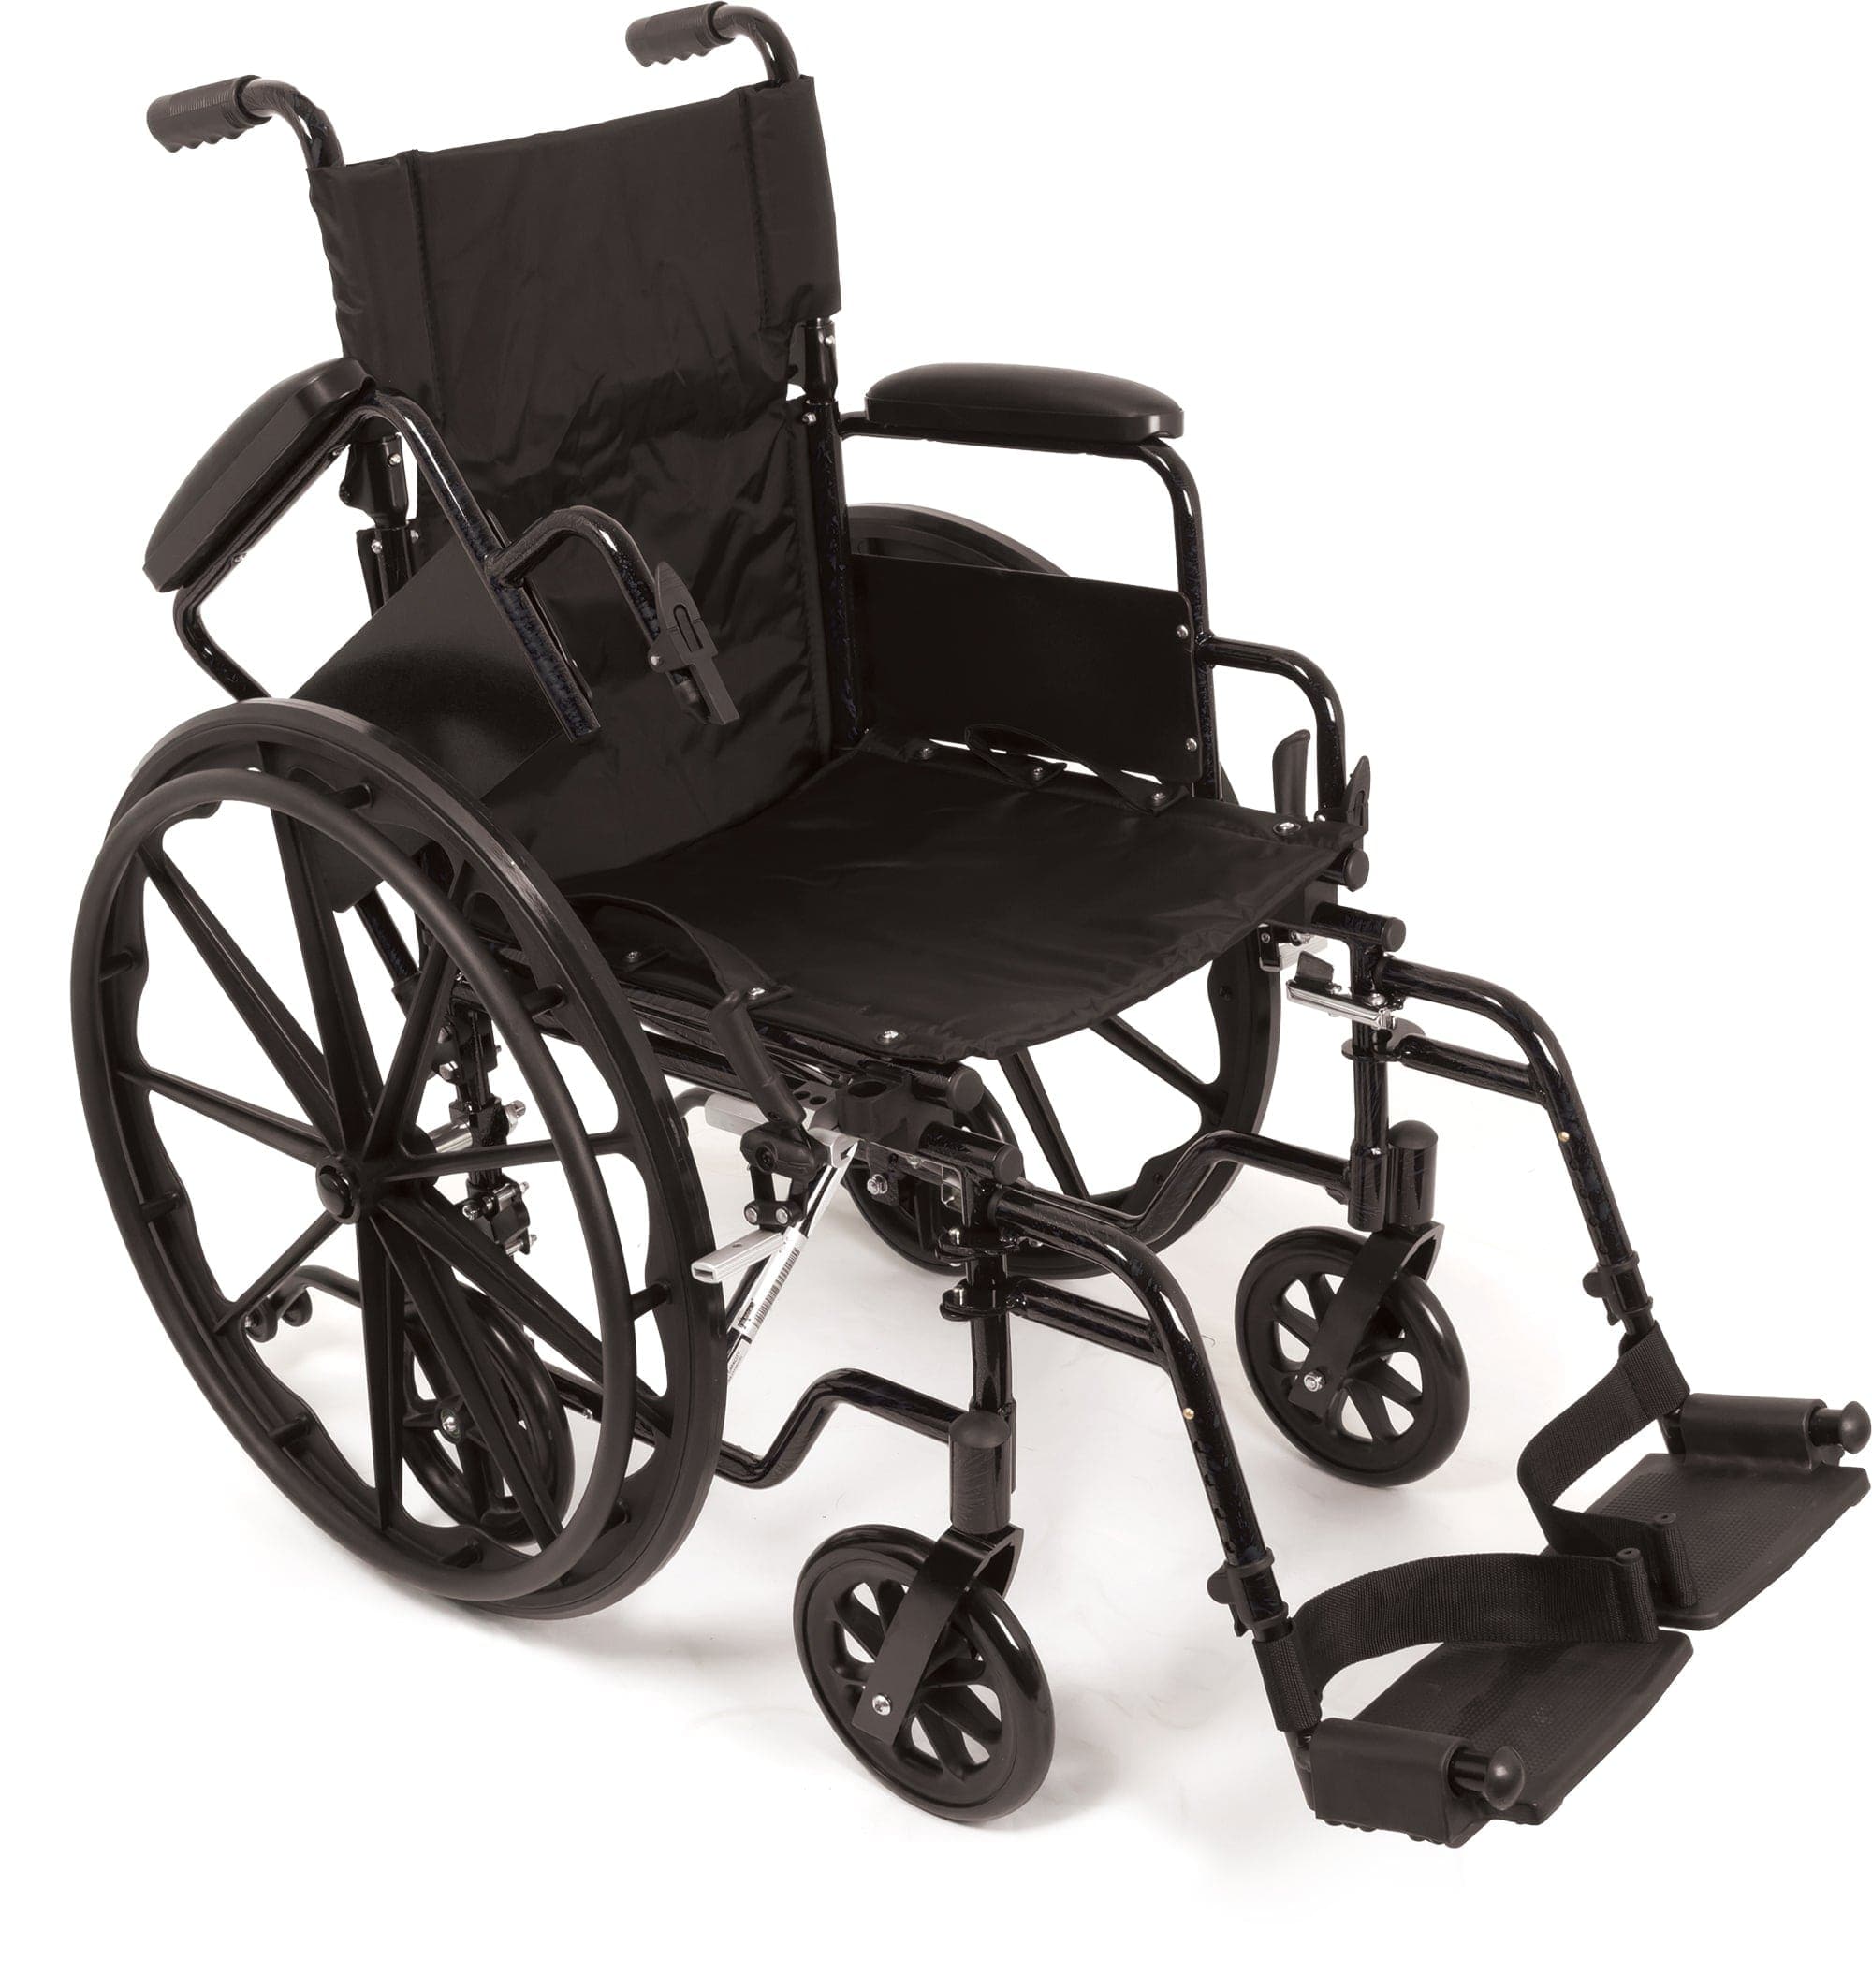 Compass Health K4 Wheelchairs Compass Health ProBasics K4 Transformer Wheelchair with 16" x 16" Seat,